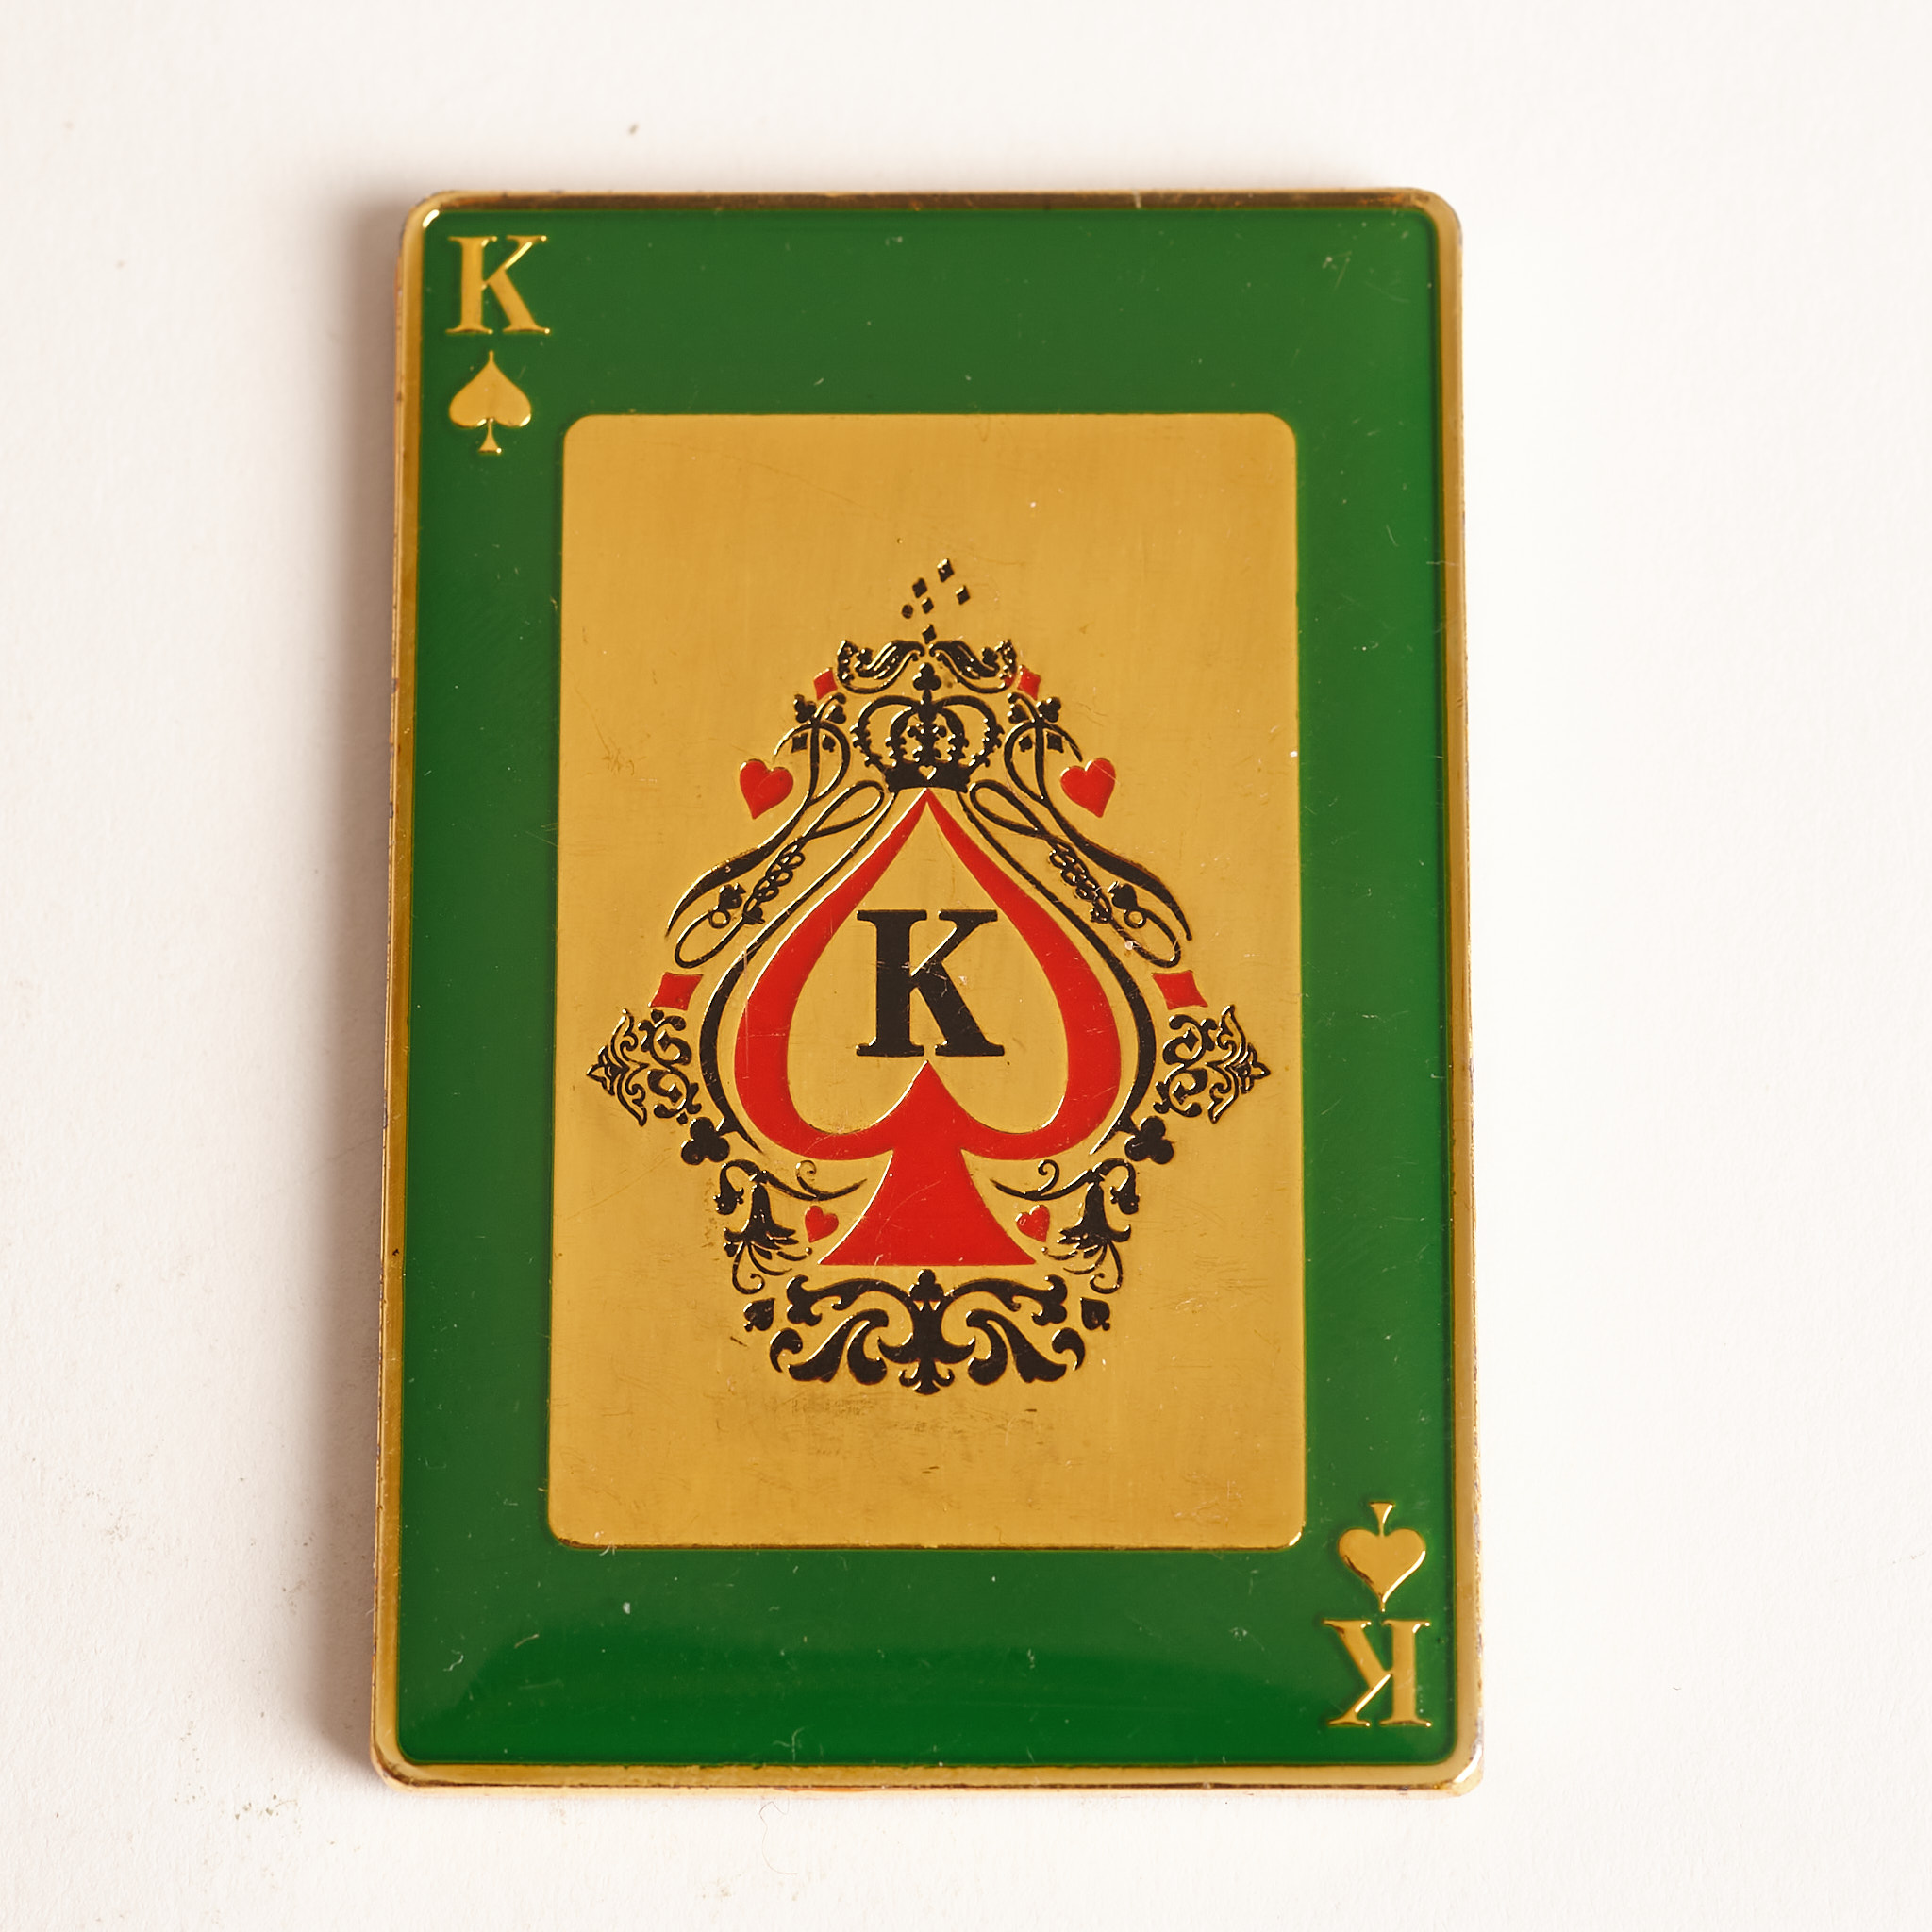 888 POKER LEAGUE, KING SPADES, TOURNAMENT WINNER, ROYAL FLUSH SERIES, Poker Card Guard